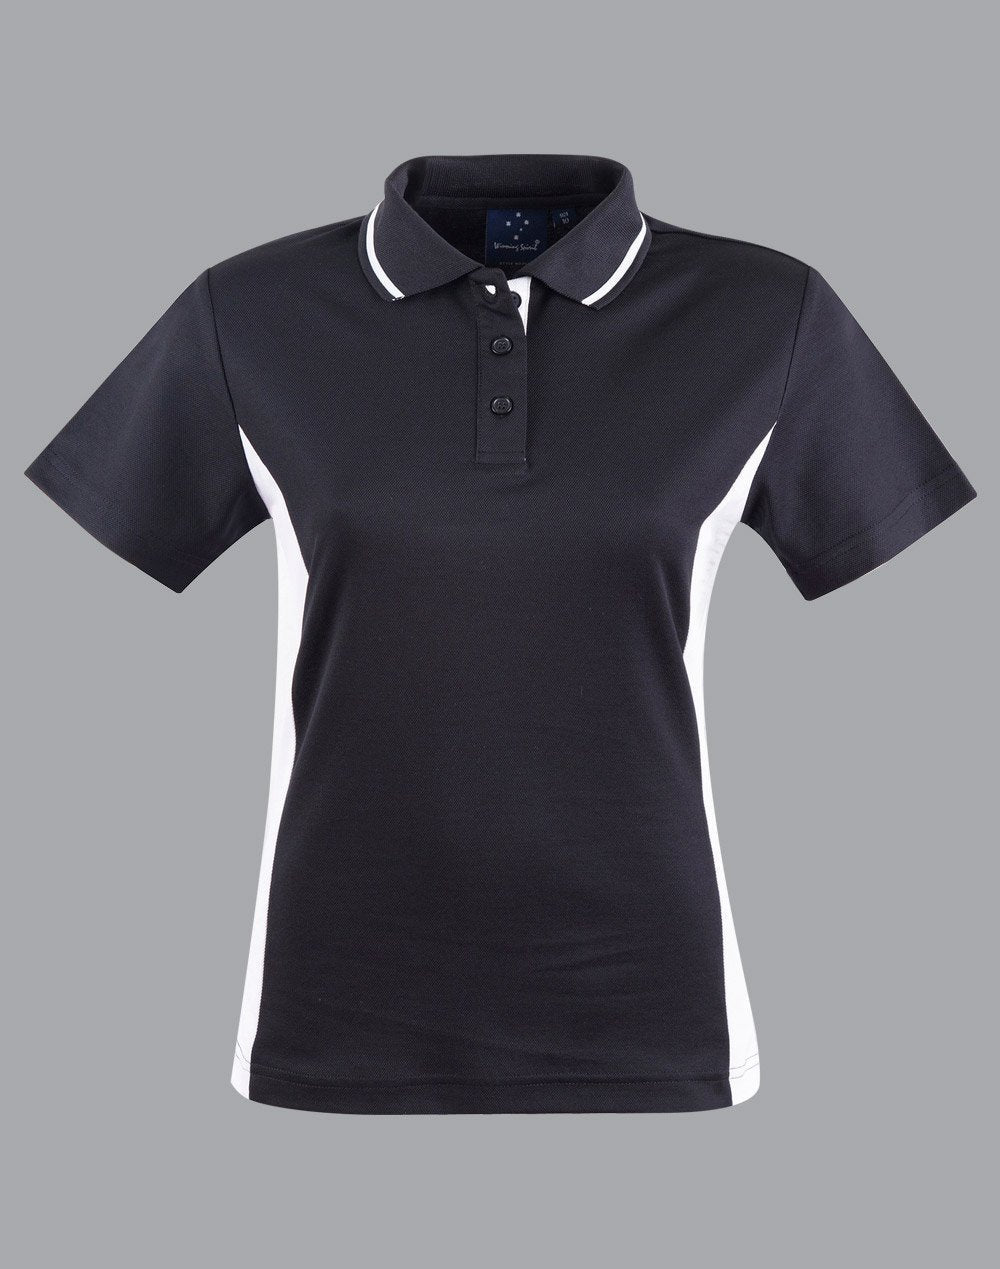 Teammate Polo Shirt Ladies  PS74 Casual Wear Winning Spirit 8 Black/White 